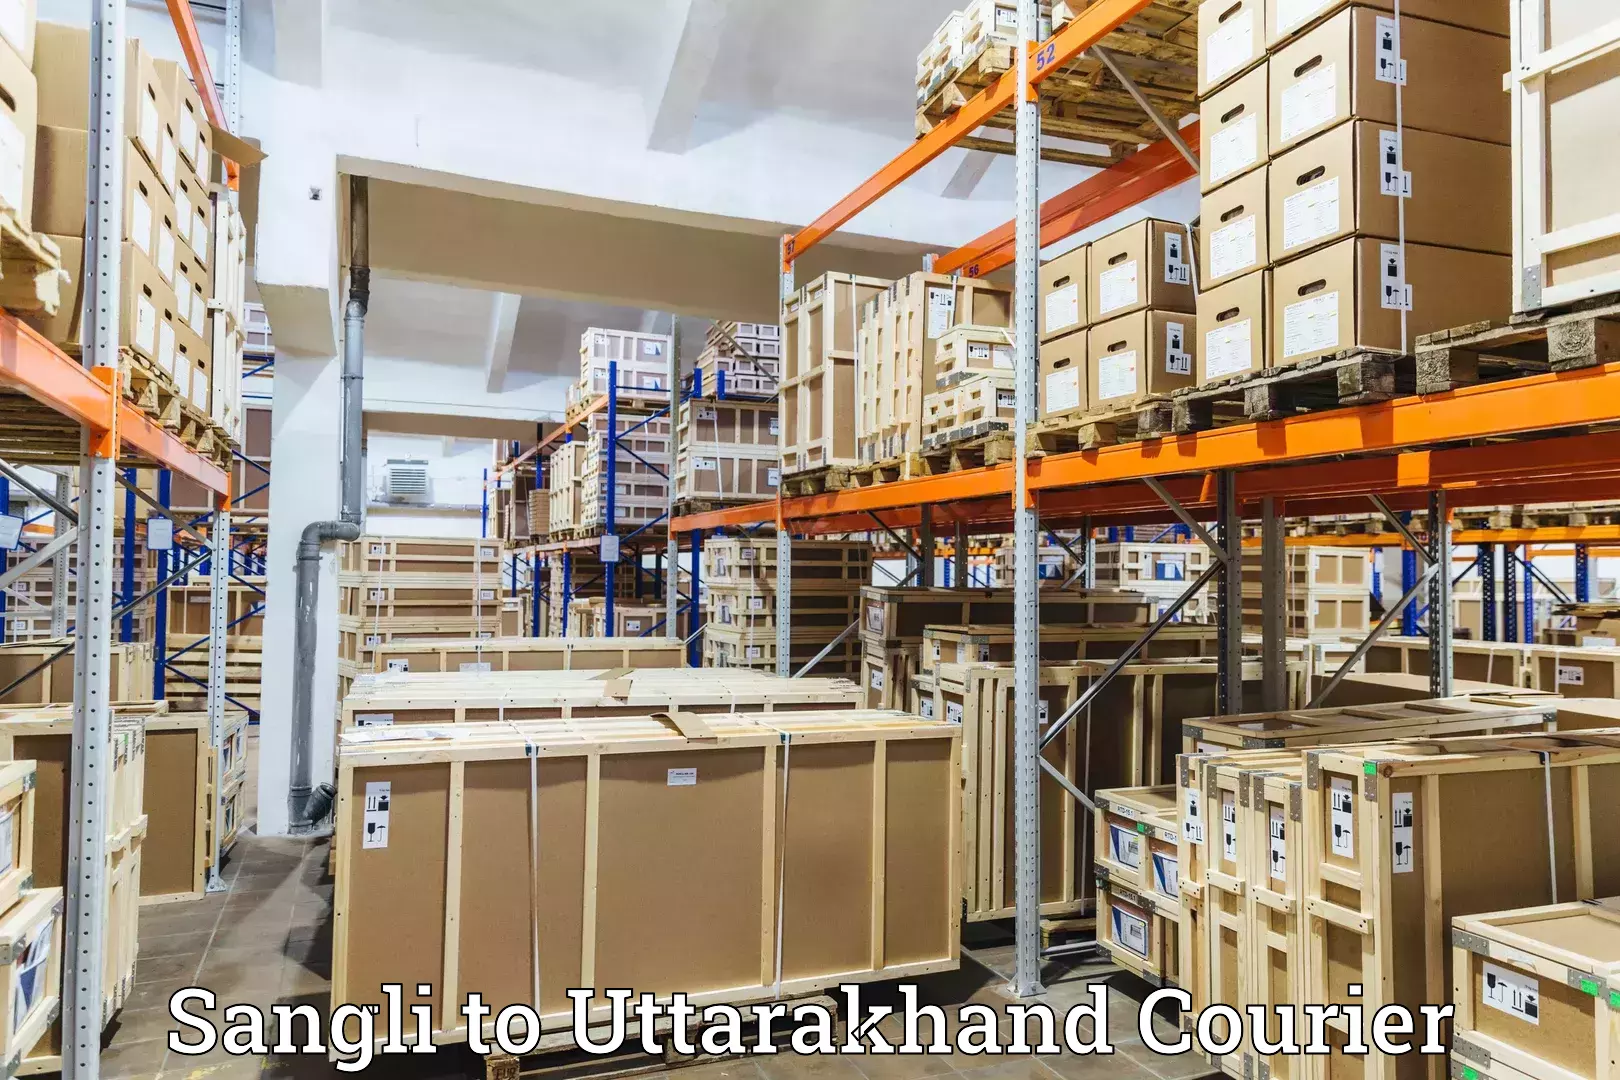 Logistics service provider Sangli to Doiwala